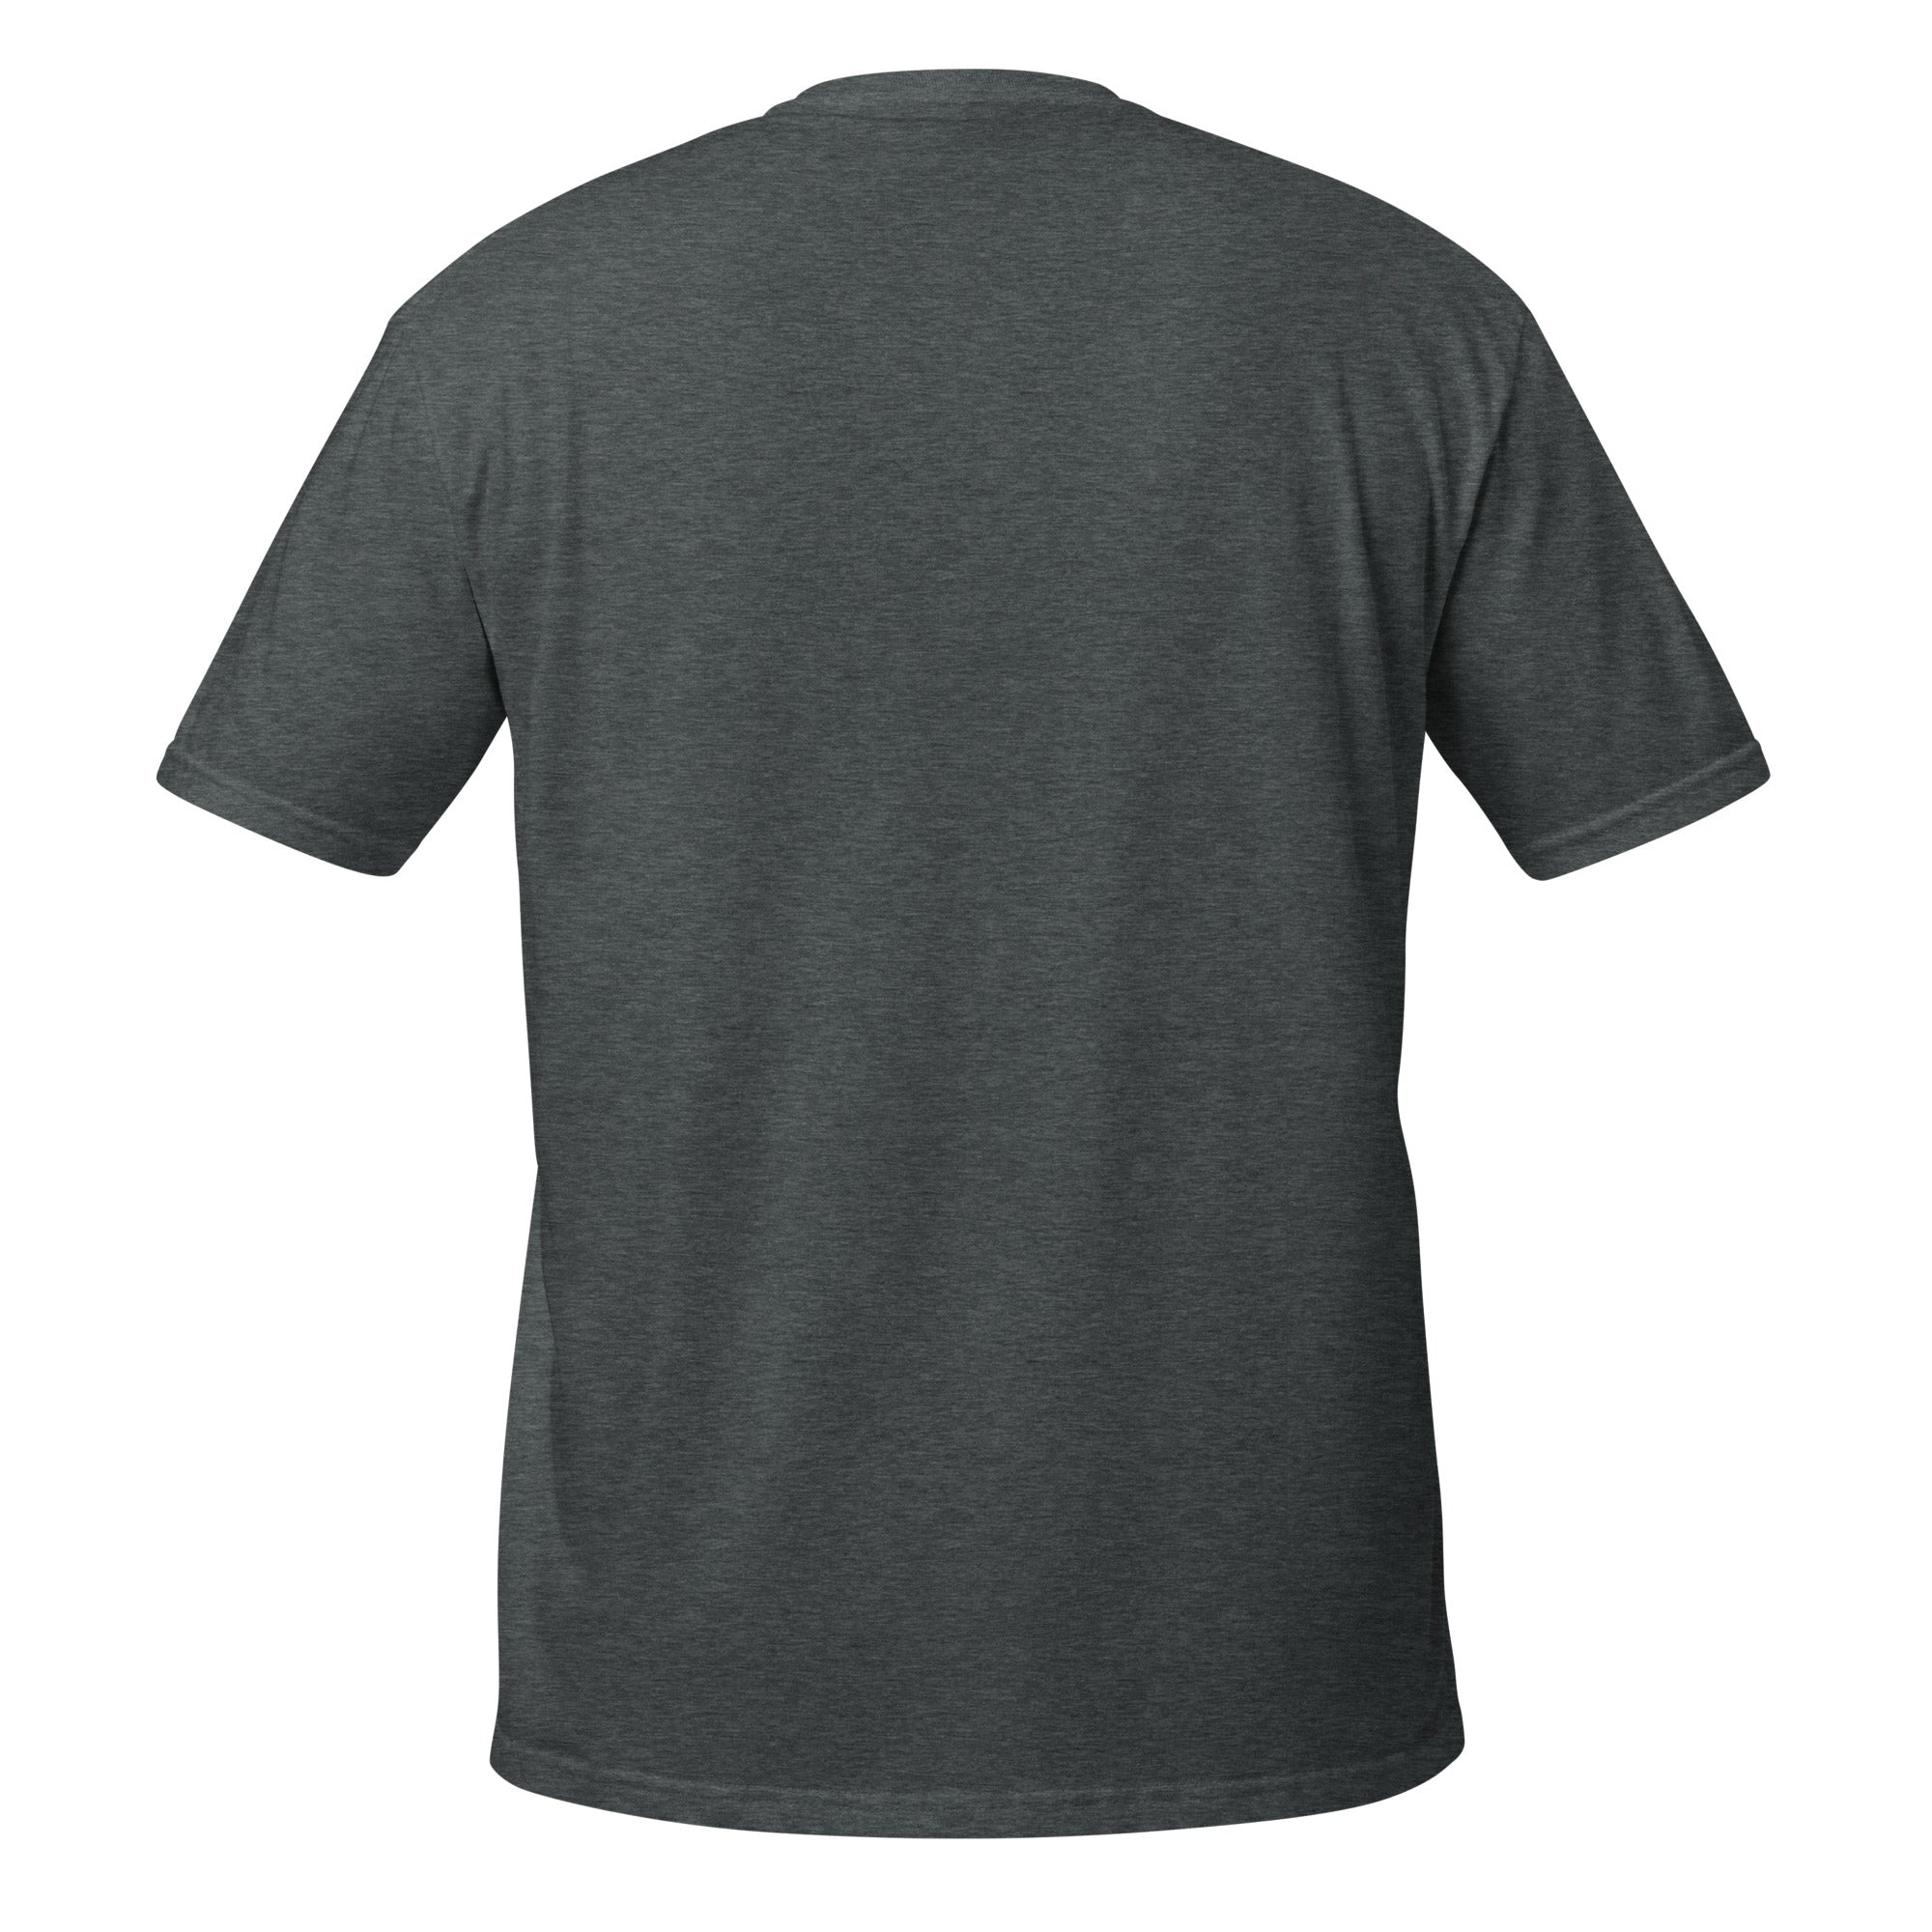 Short-Sleeve Unisex T-Shirt- Peace Love Pride